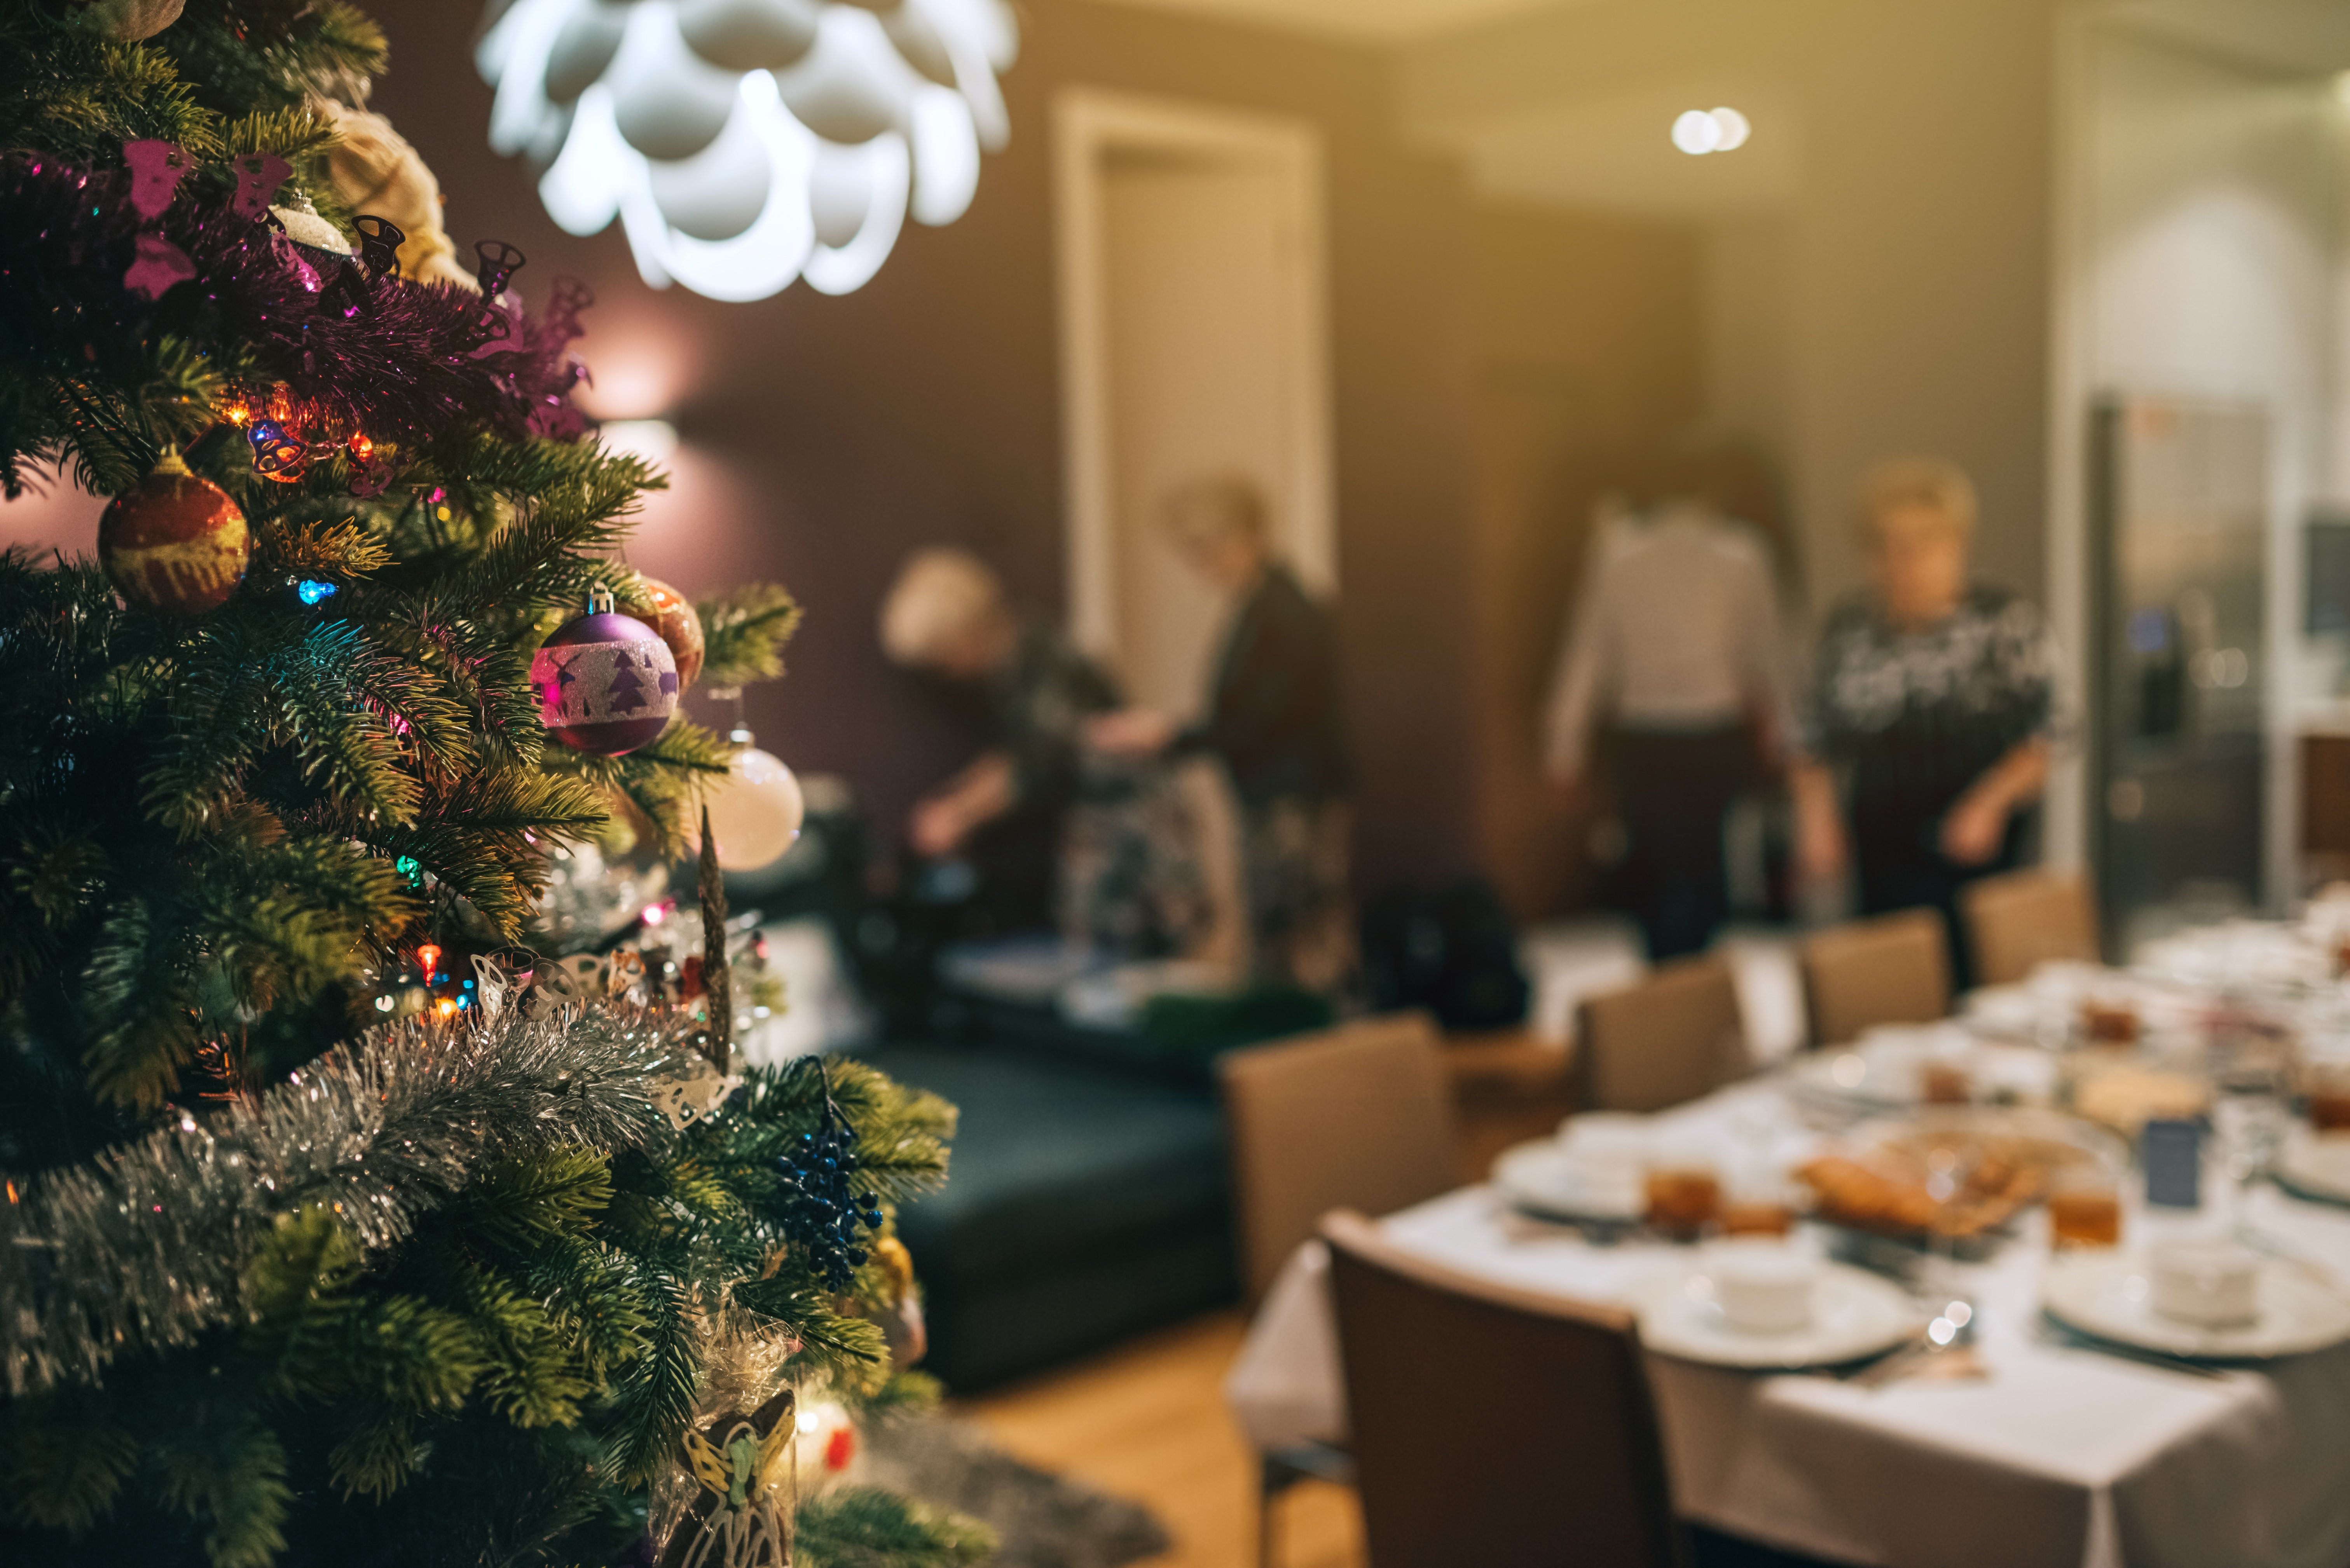 Reunión navideña familiar. | Foto: Shutterstock